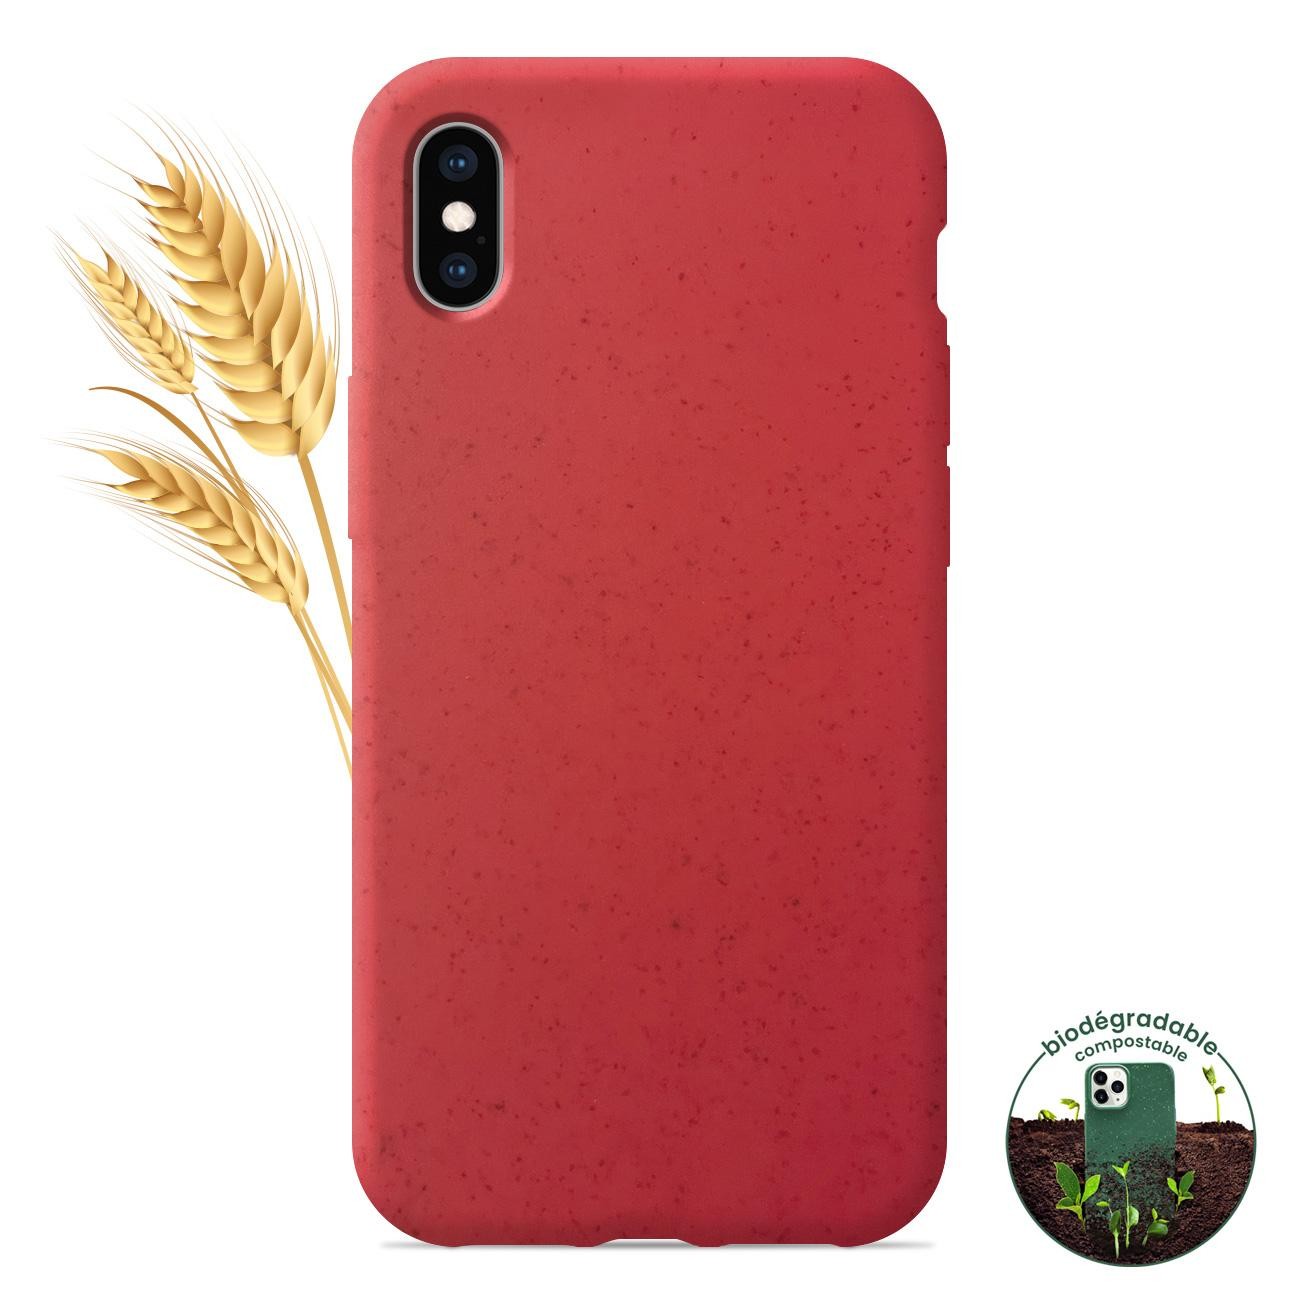 Coque silicone unie Biodégradable Rouge compatible Apple iPhone X iPhone XS